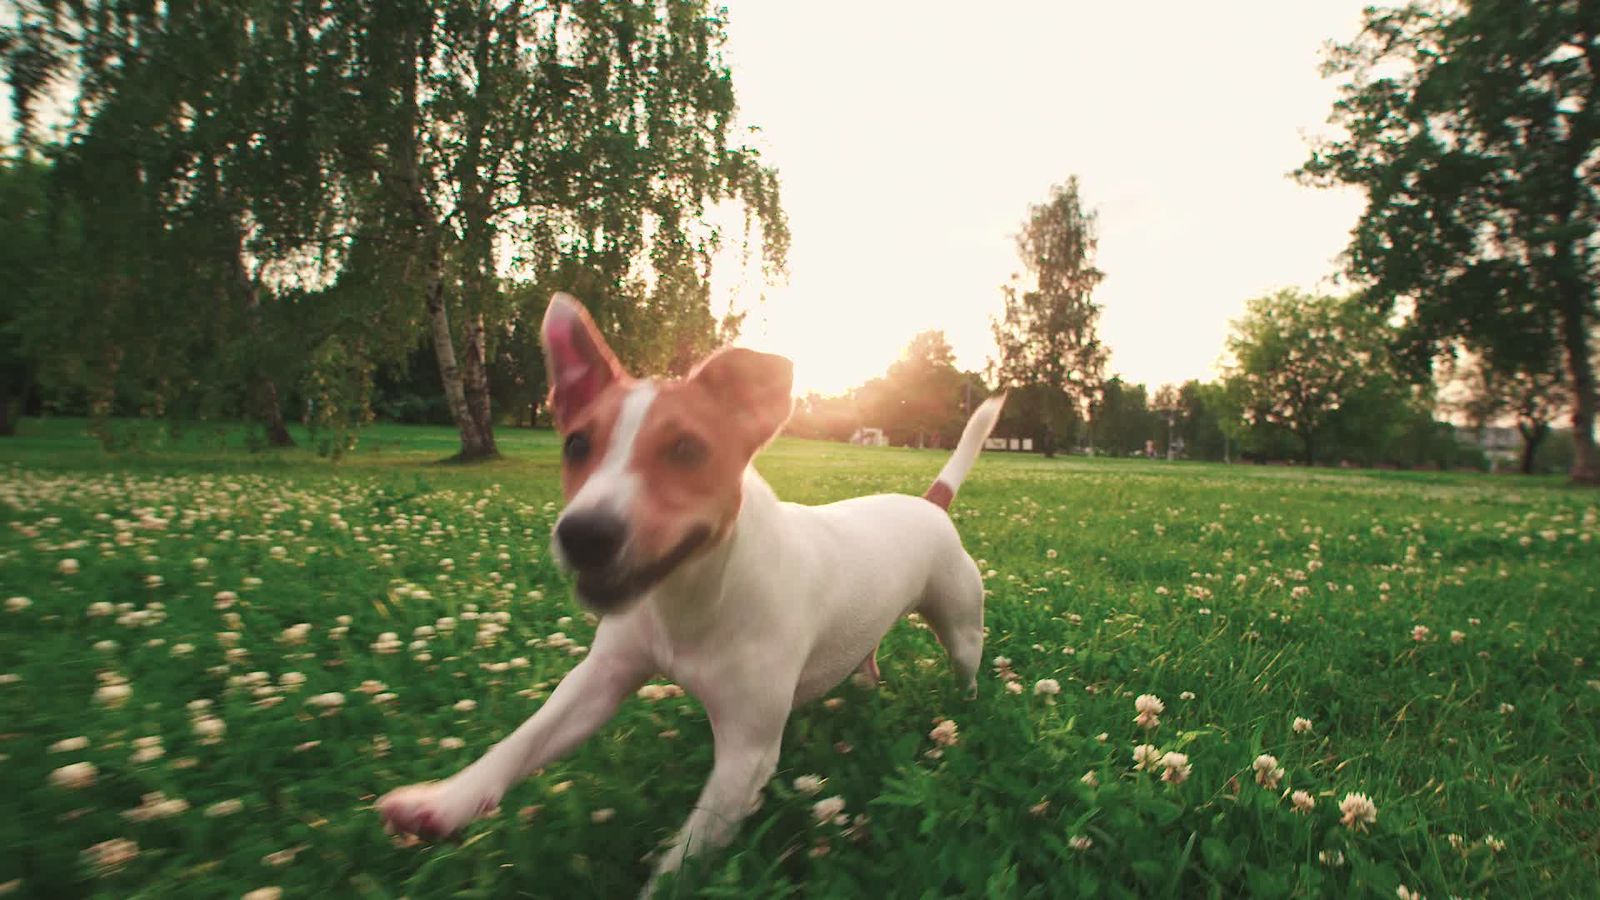 Dog running on grass